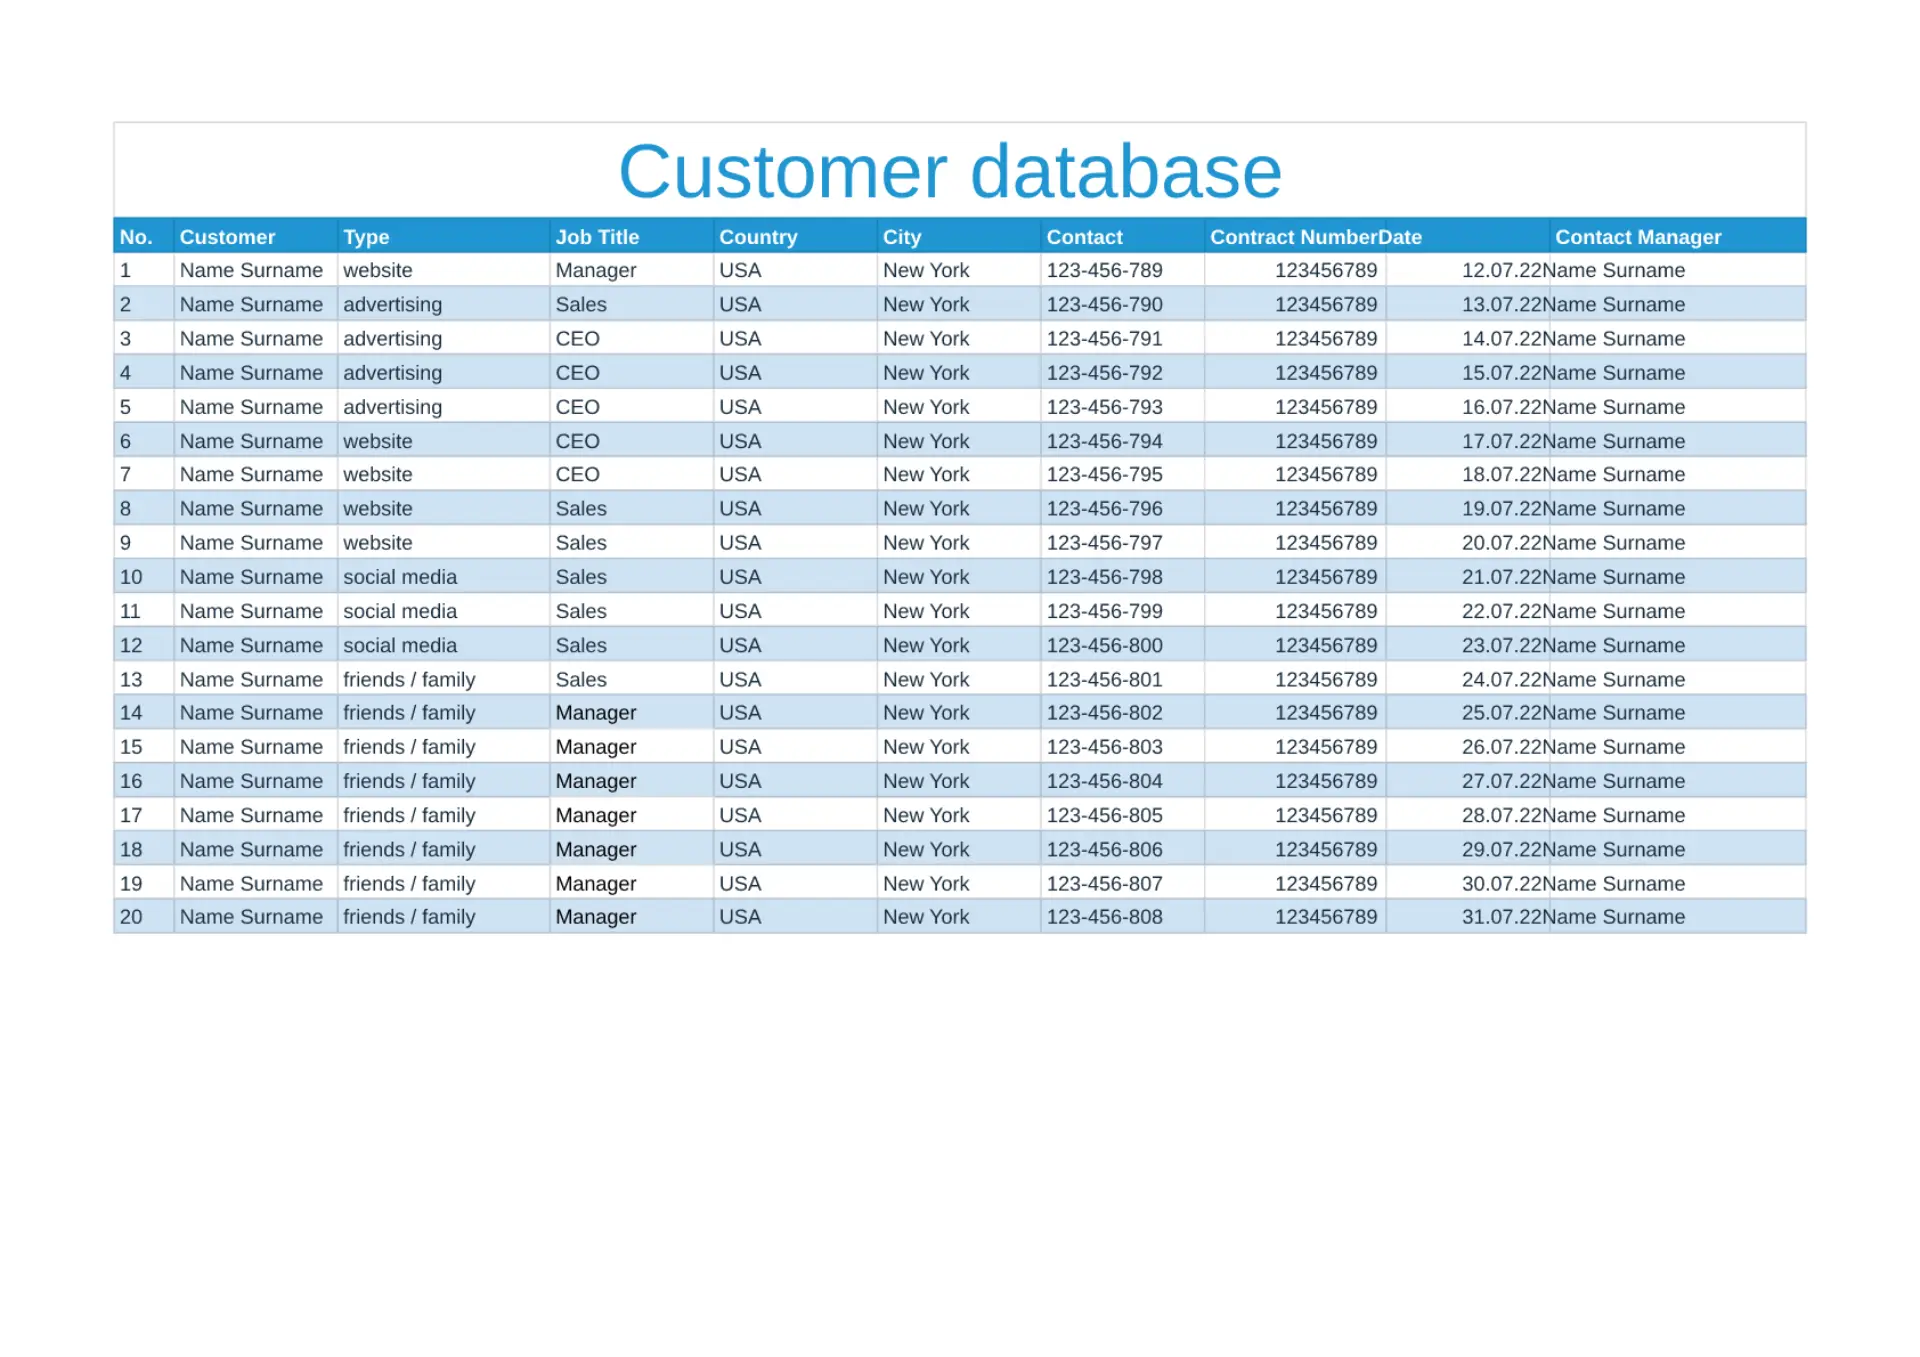 Customer Database for Google Sheets